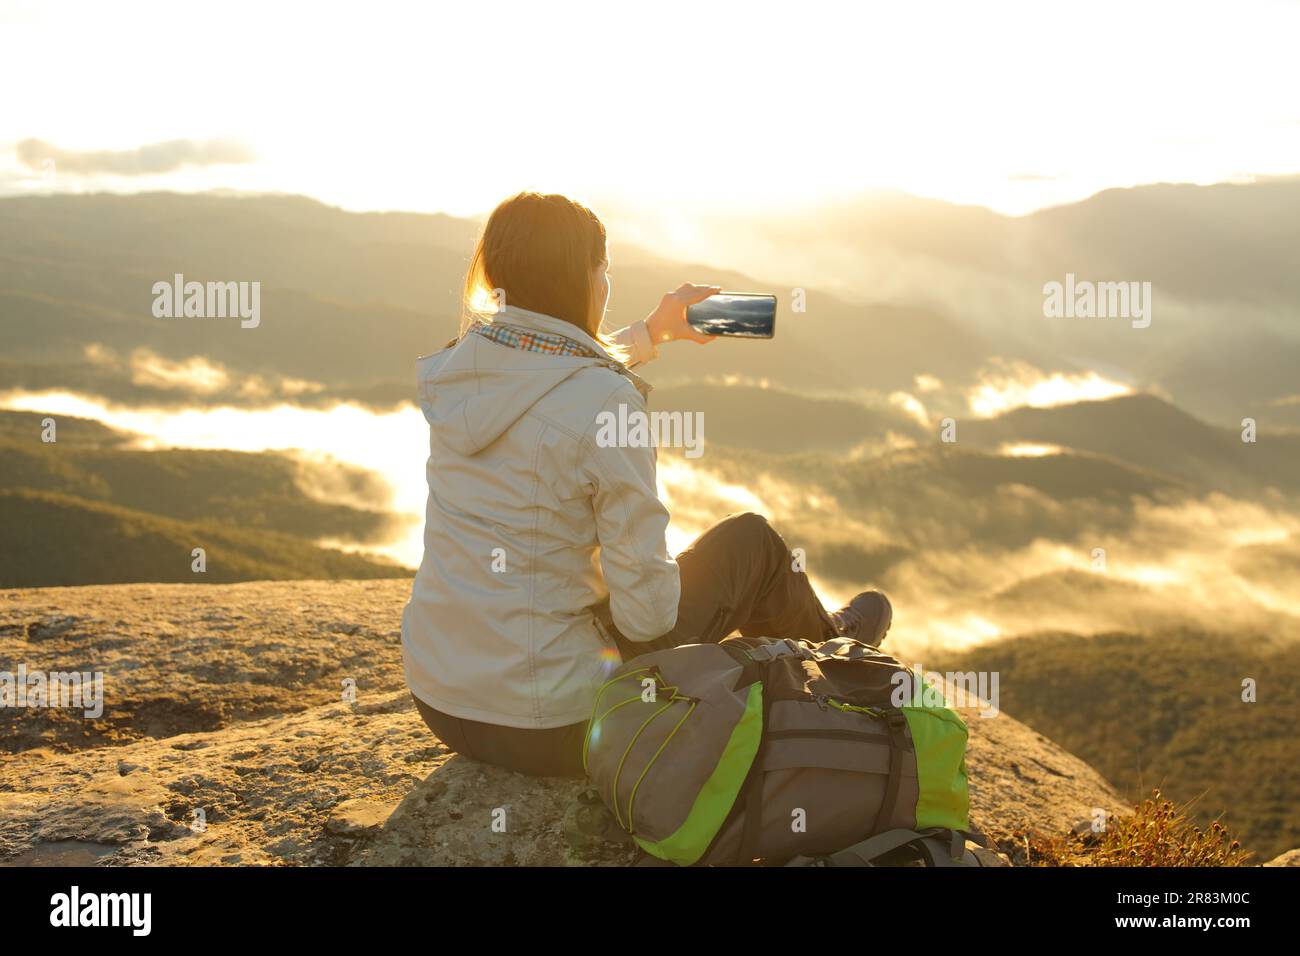 Single trekker taking photo of a mountain on smartphone at sunrise Stock Photo